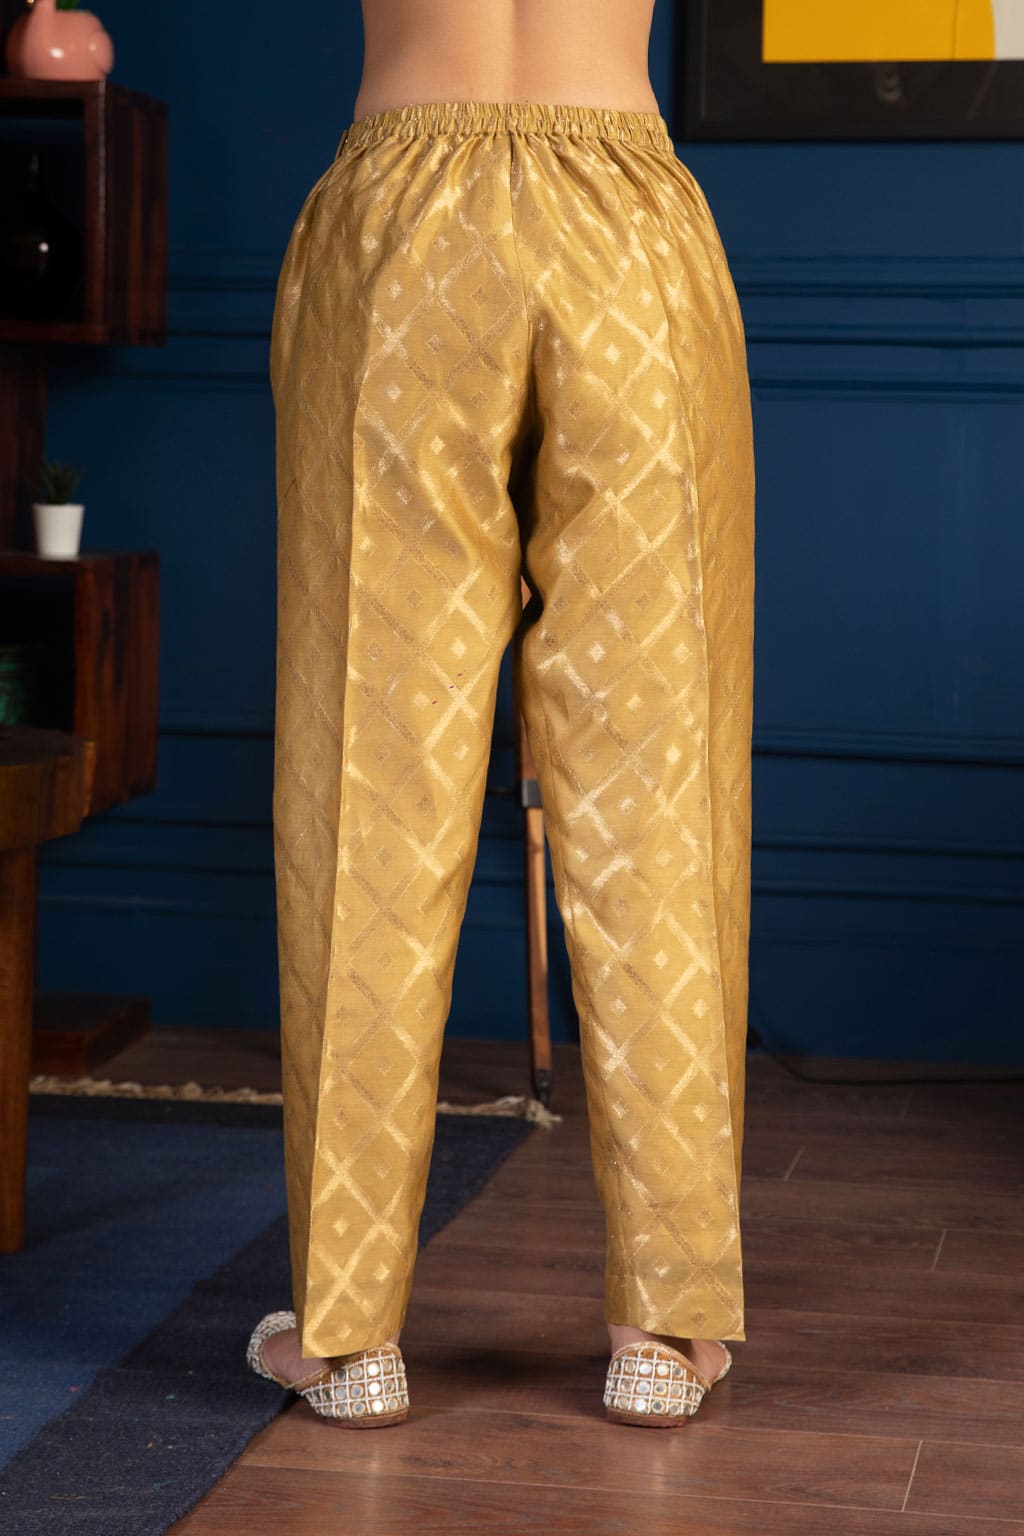 Women Solid Medium Gold Mid Rise Shiny Pants